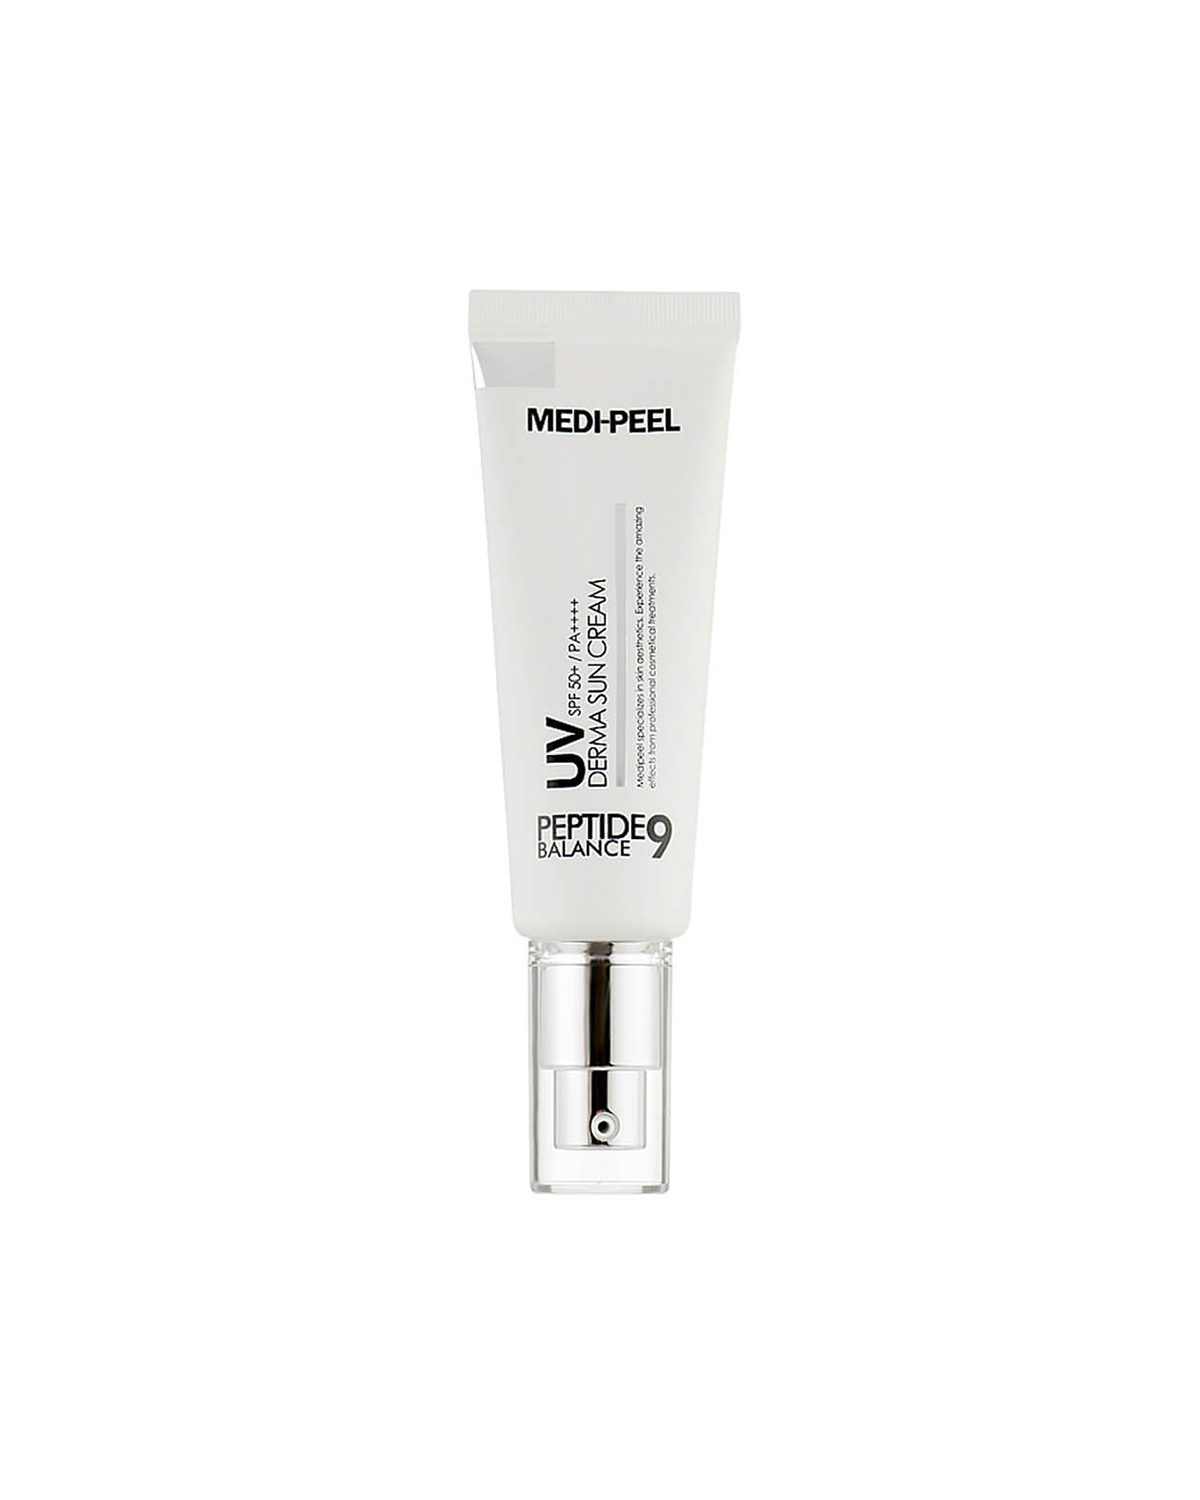 MEDI-PEEL Peptide 9 Balance UV Derma Sun Cream SPF 50+ PA++++